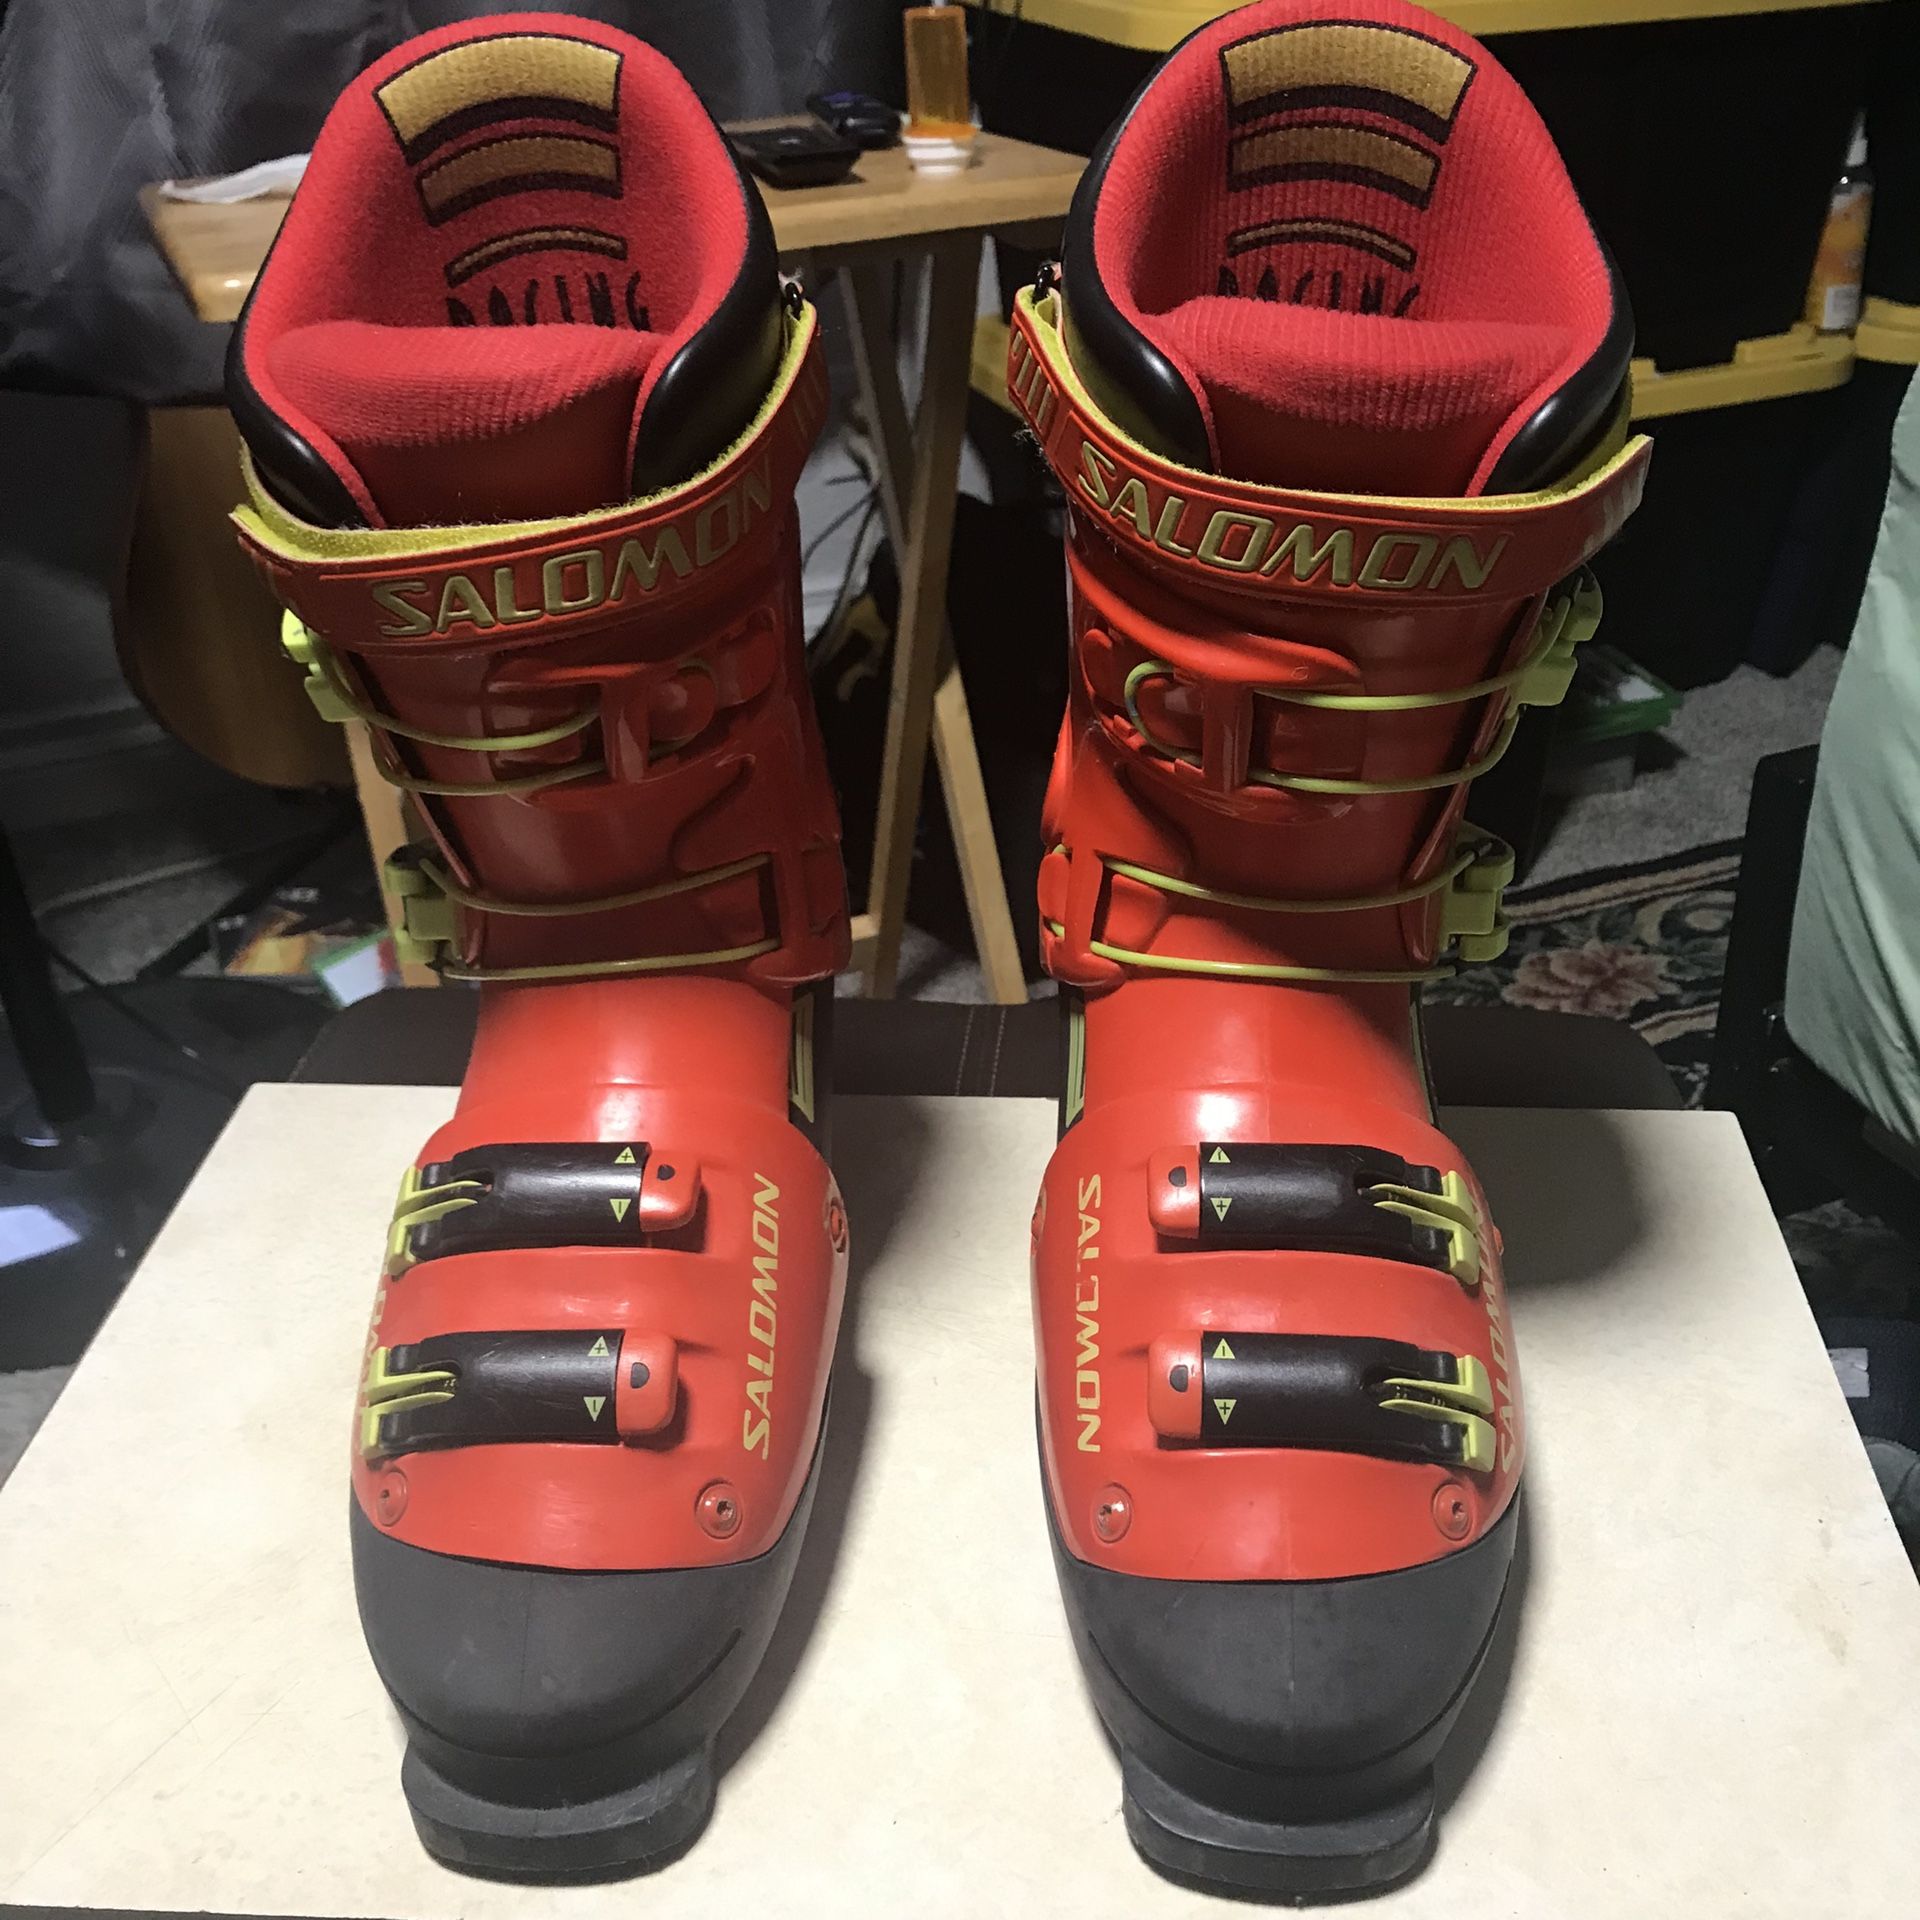 Salomon Ski Boots With Snowboard Boots